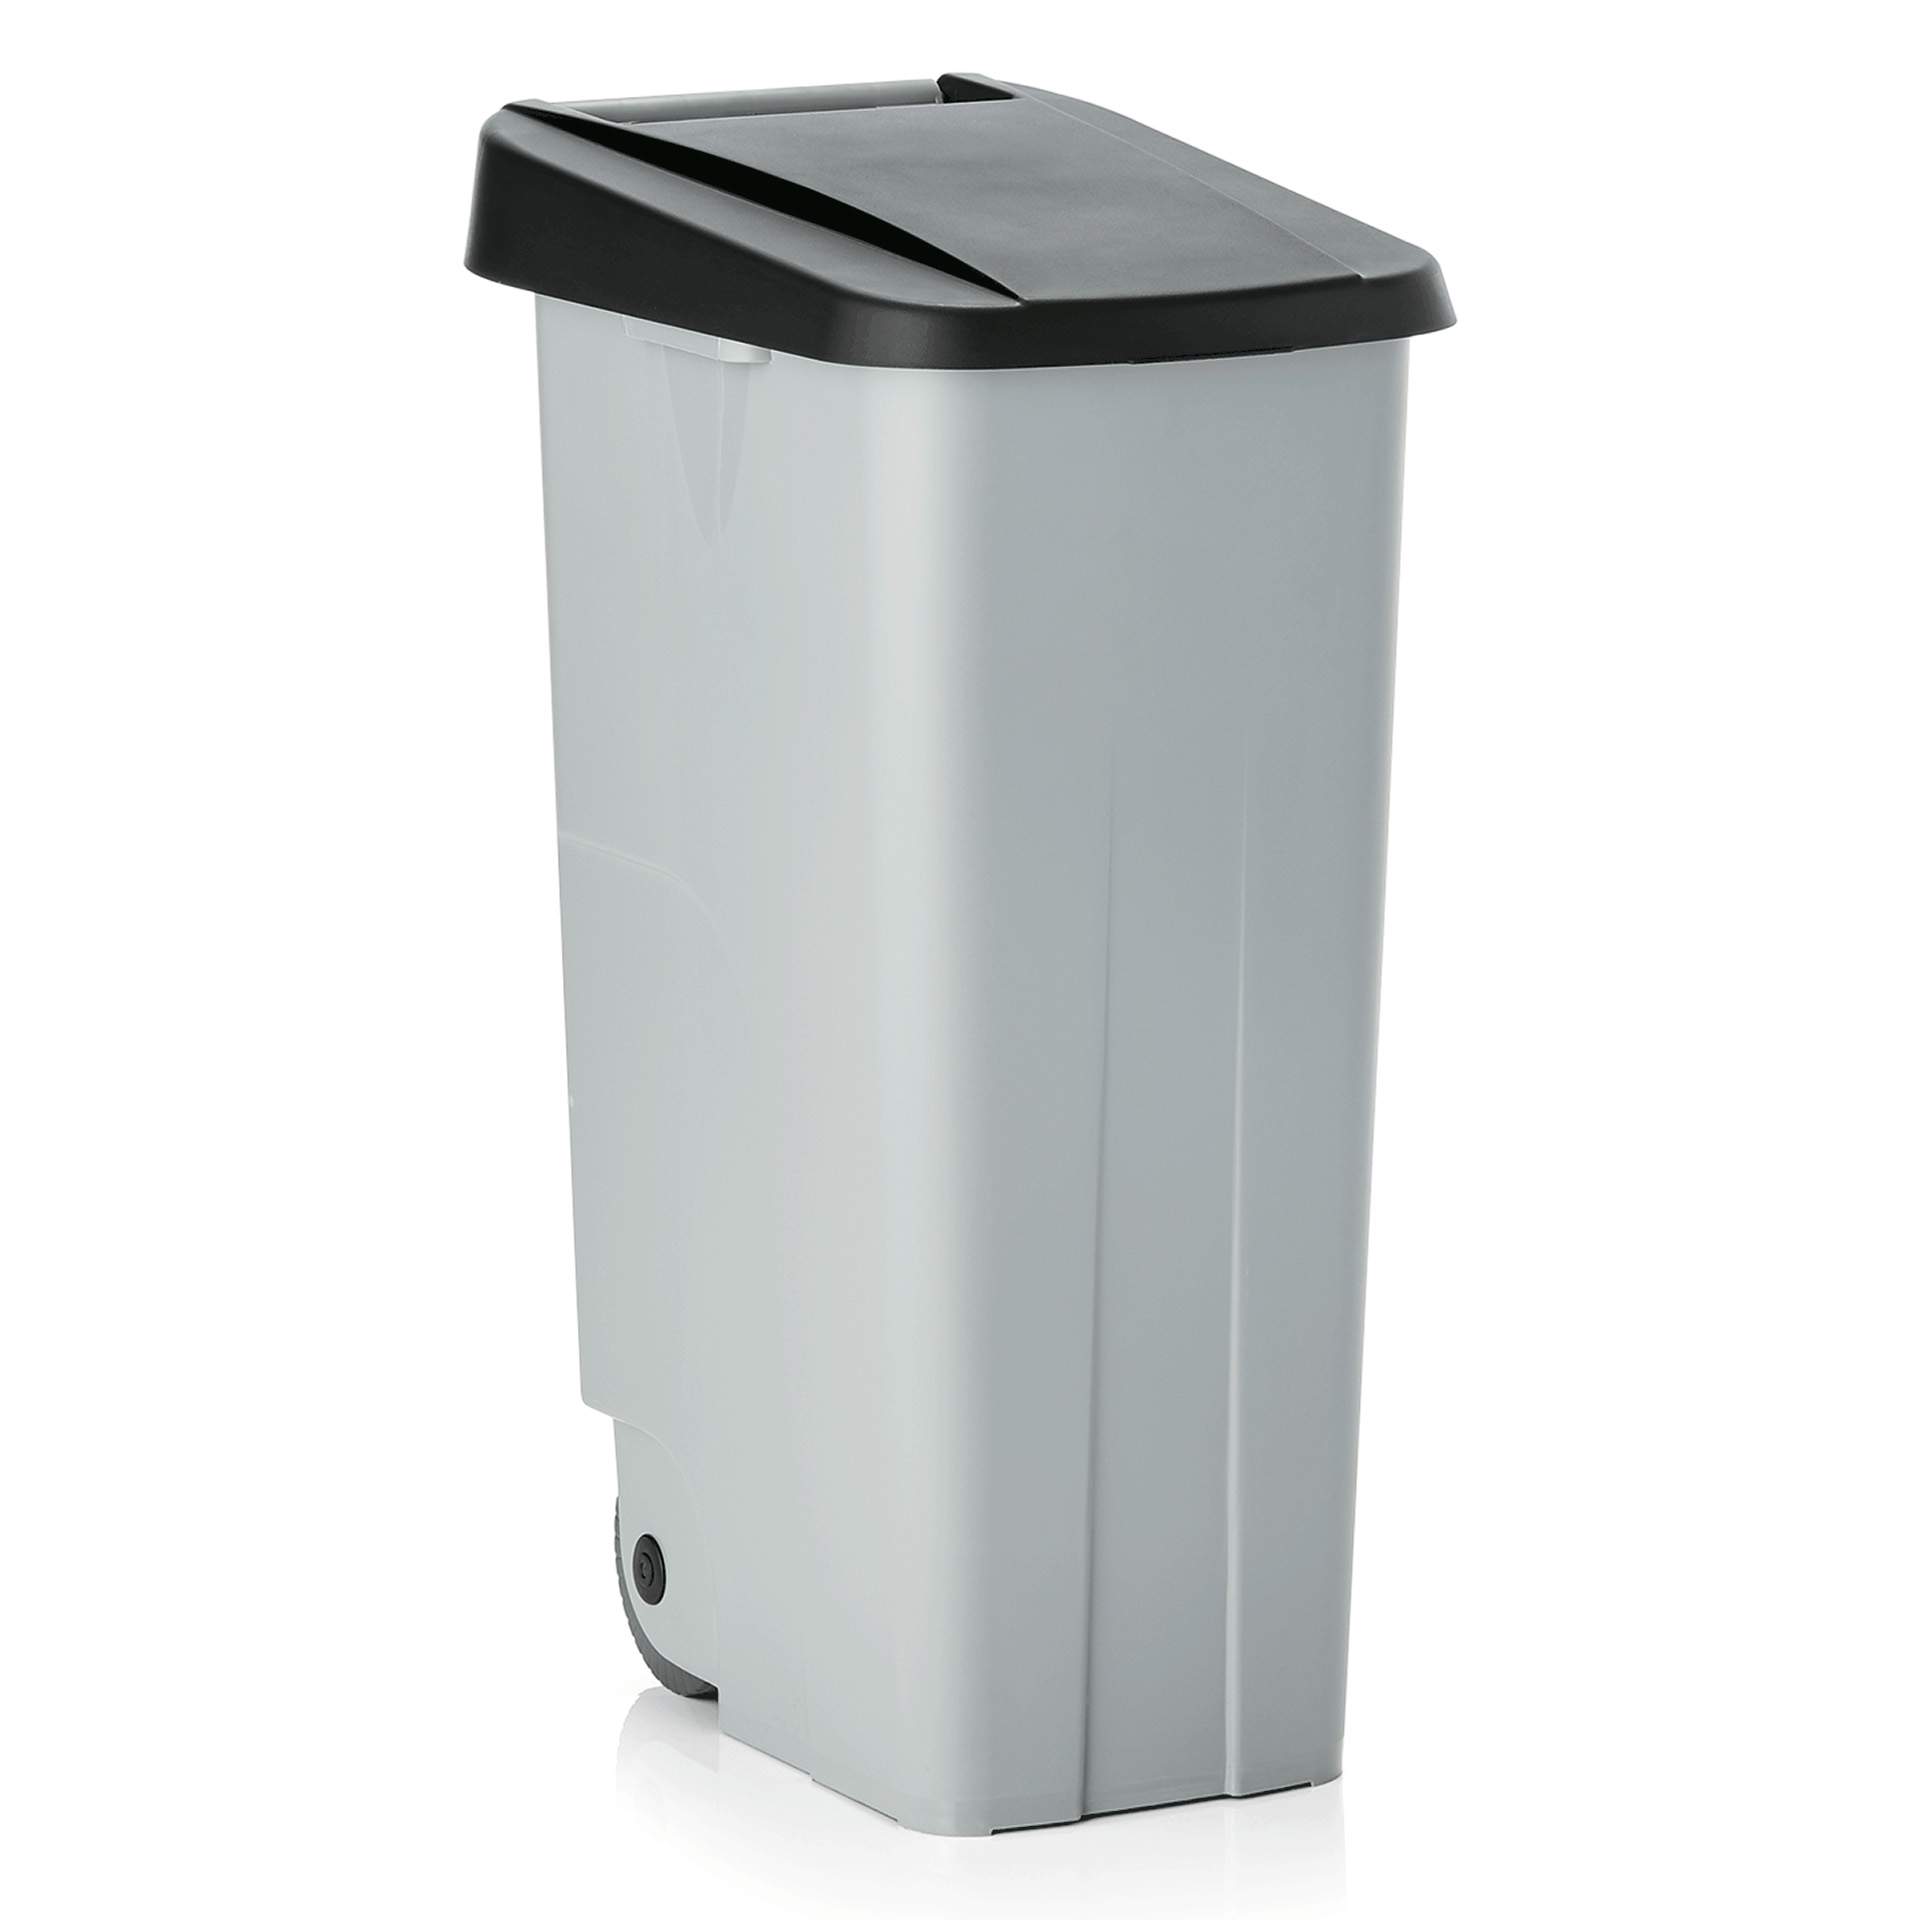 Abfallbehälter - schwarz - eckig - Abm. 57 x 42 x 87 cm - Inhalt 110 l - Polypropylen - 9236114-A